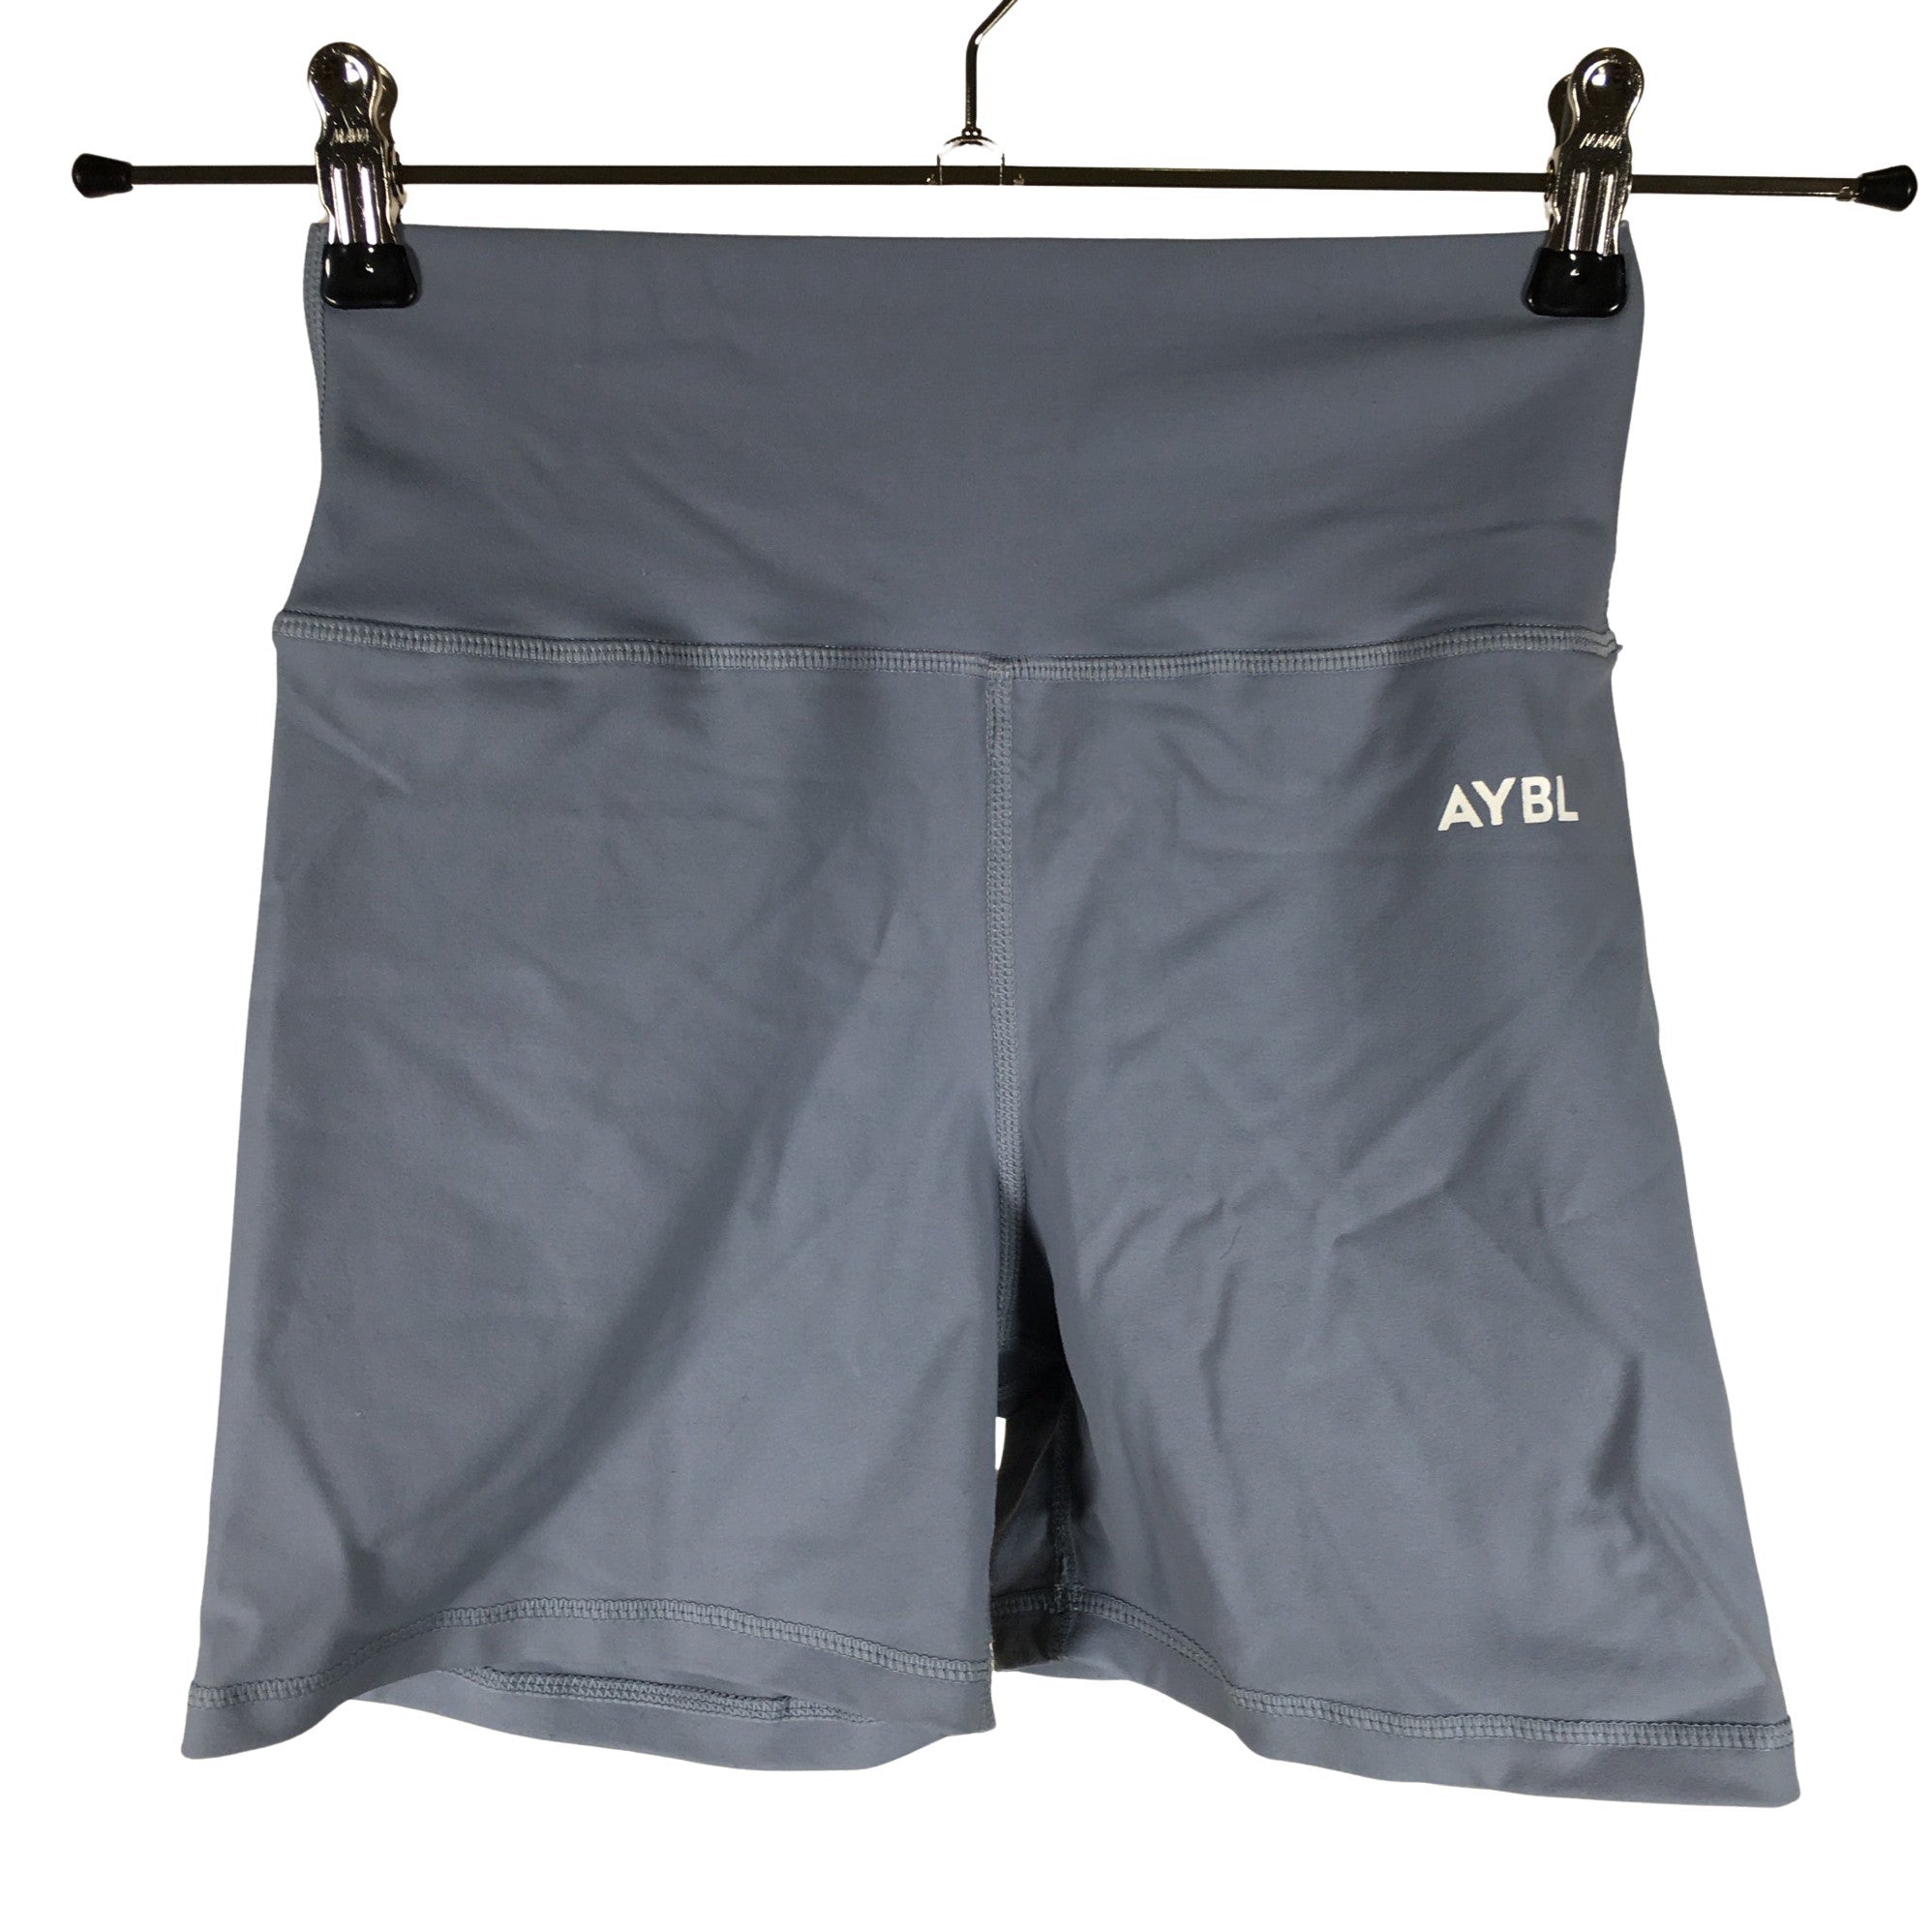 Women's AYBL Sports shorts, size 36 (Light blue)